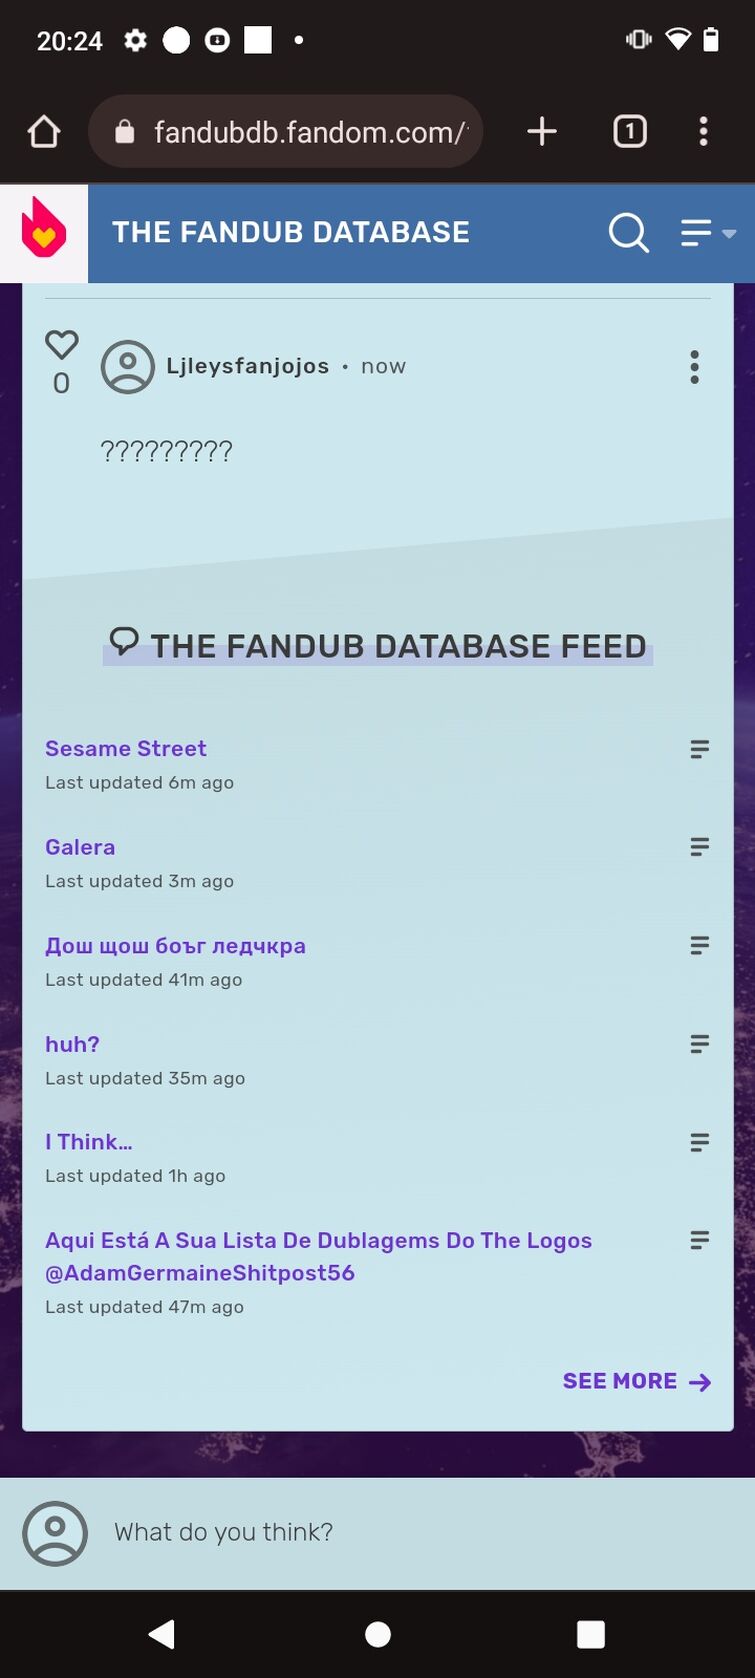 Tucky Tales, The Fandub Database